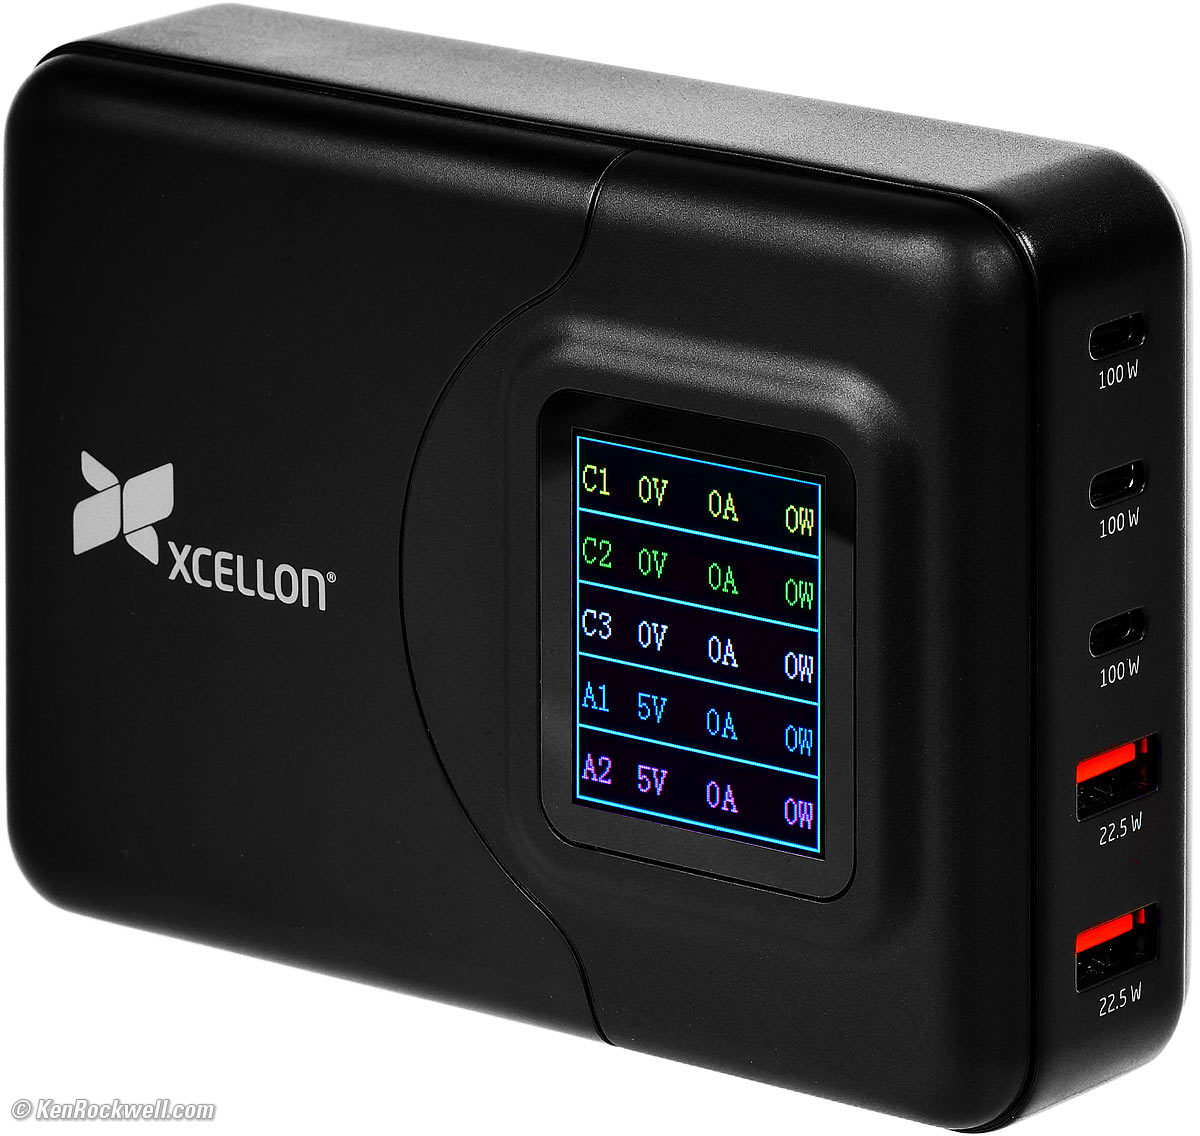 Xcellon PDG-5200L 200W GaN USB Charger